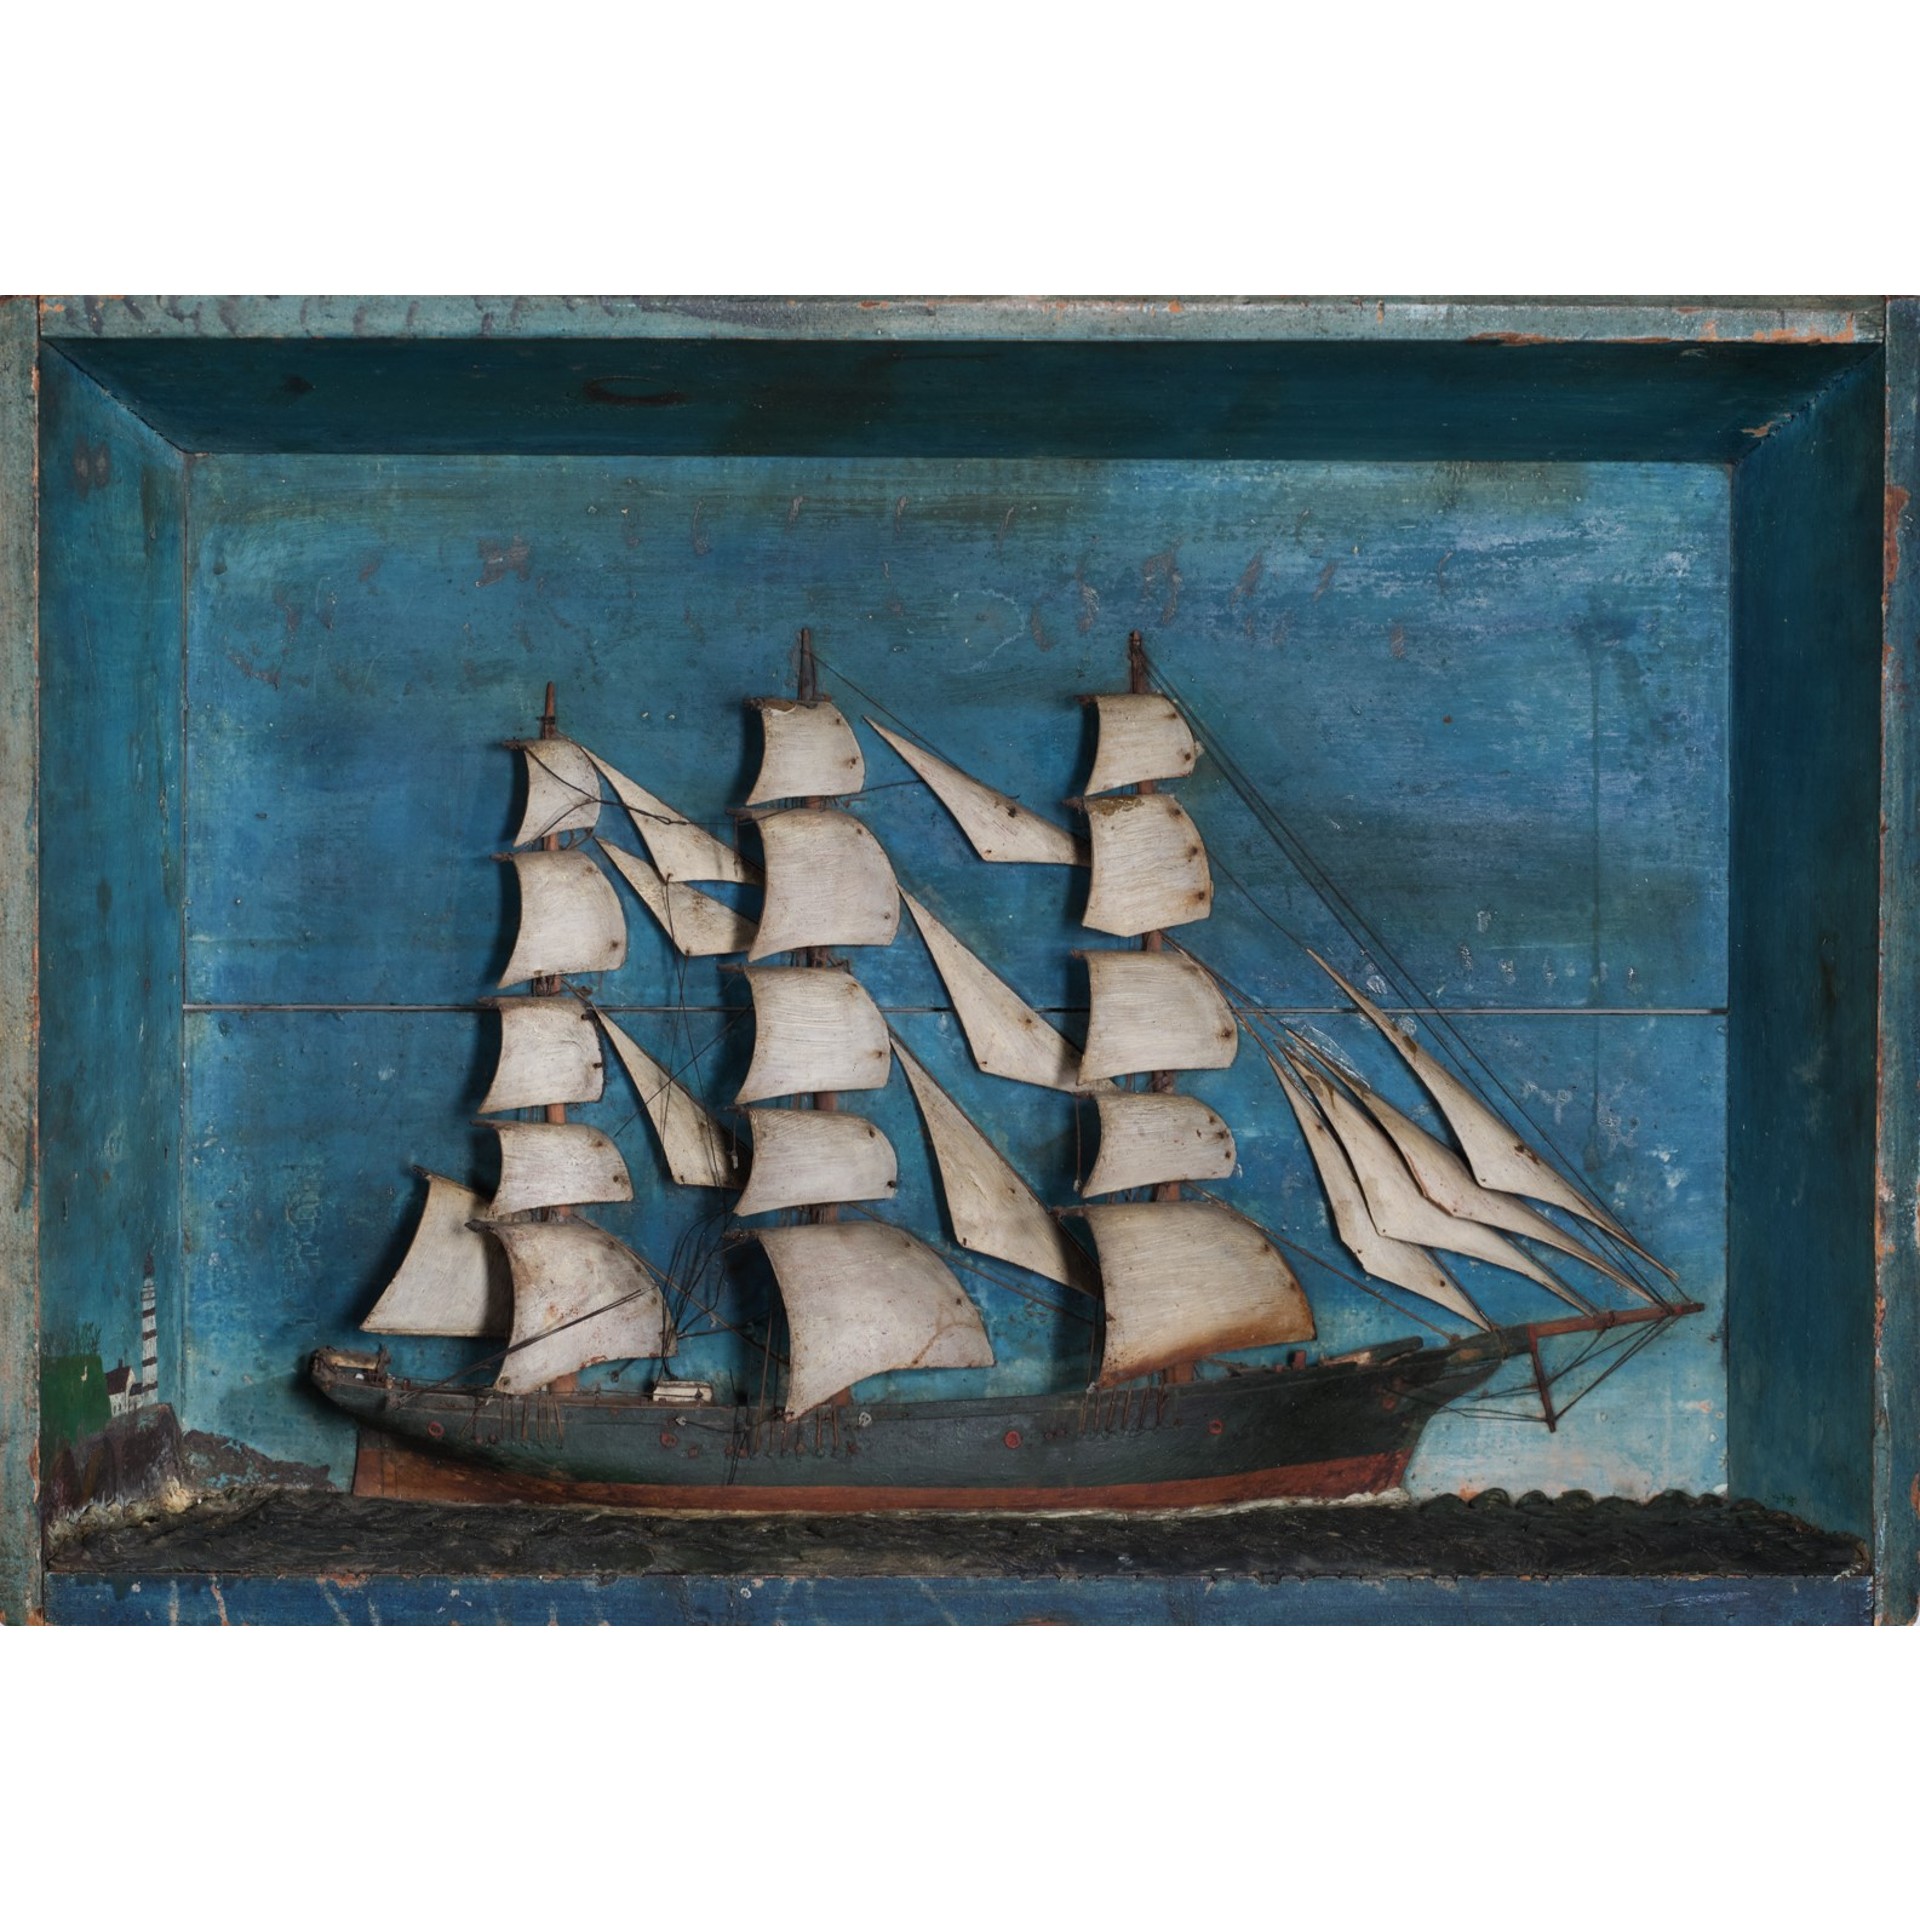 American antique ship diorama rel=